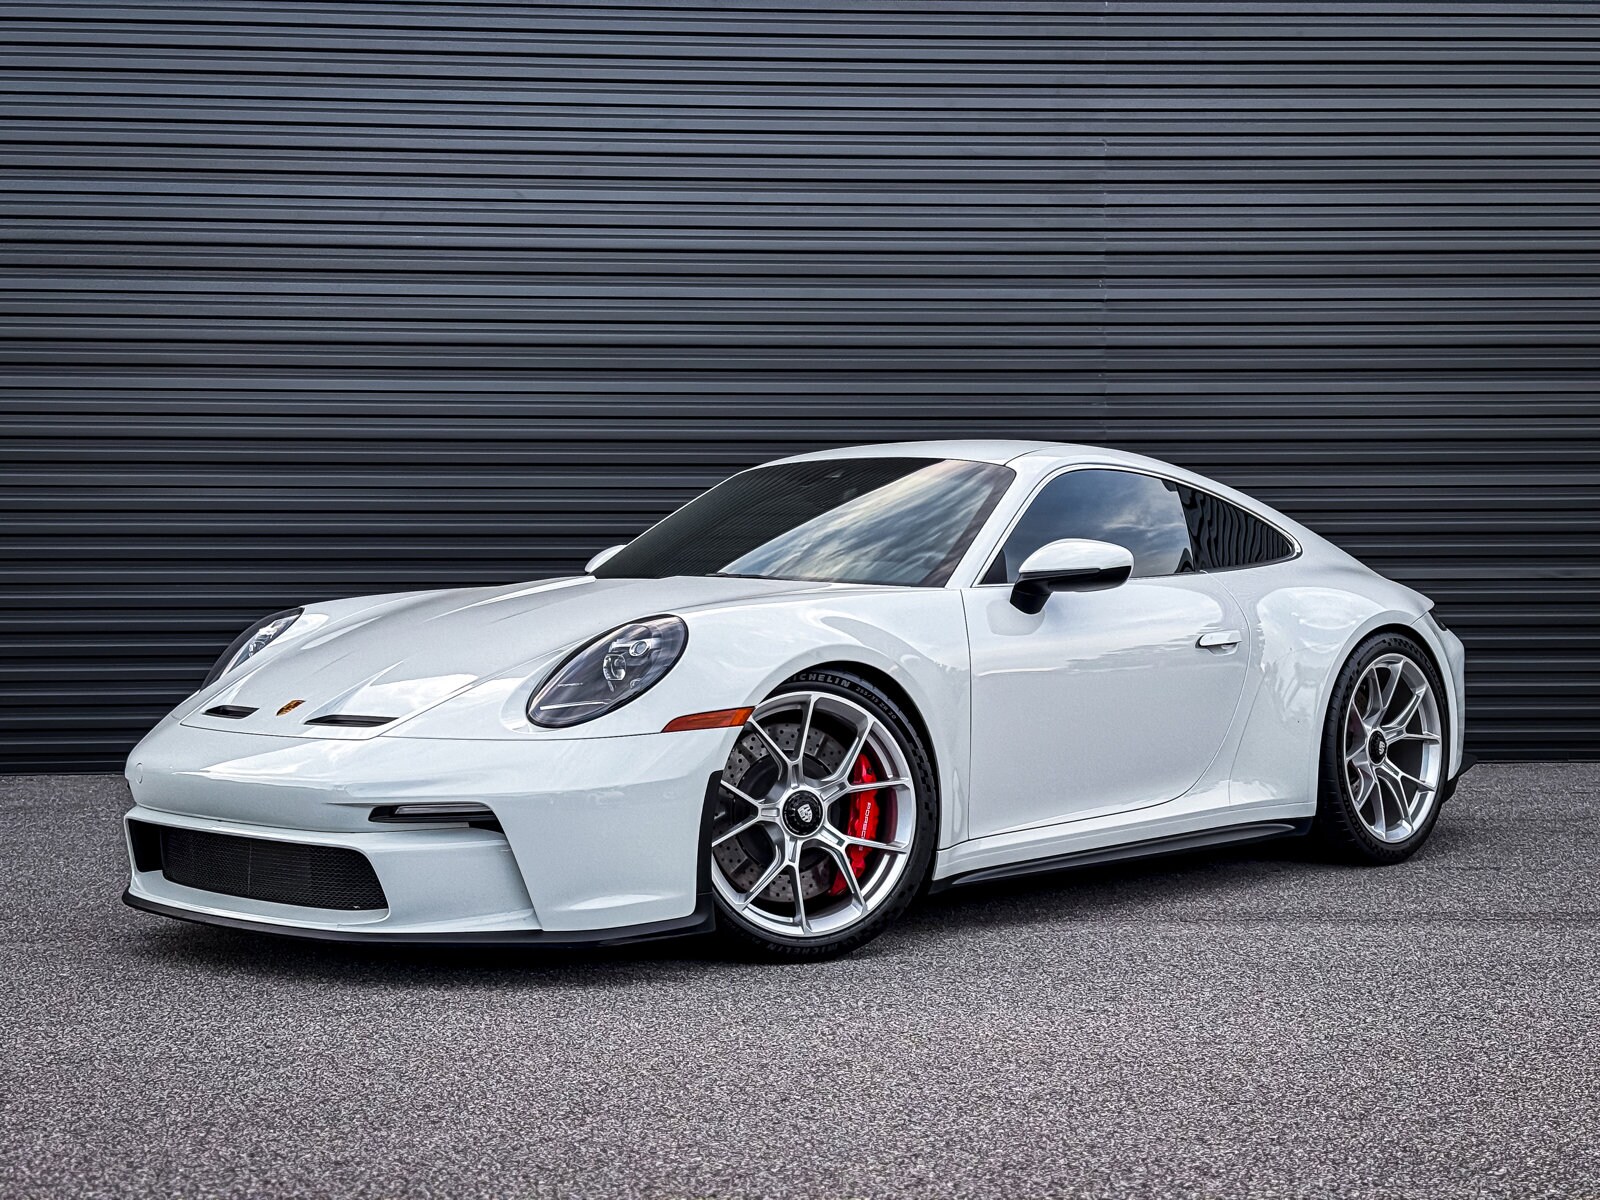 Used 2022 Porsche 911 For Sale at Porsche Jacksonville | VIN 